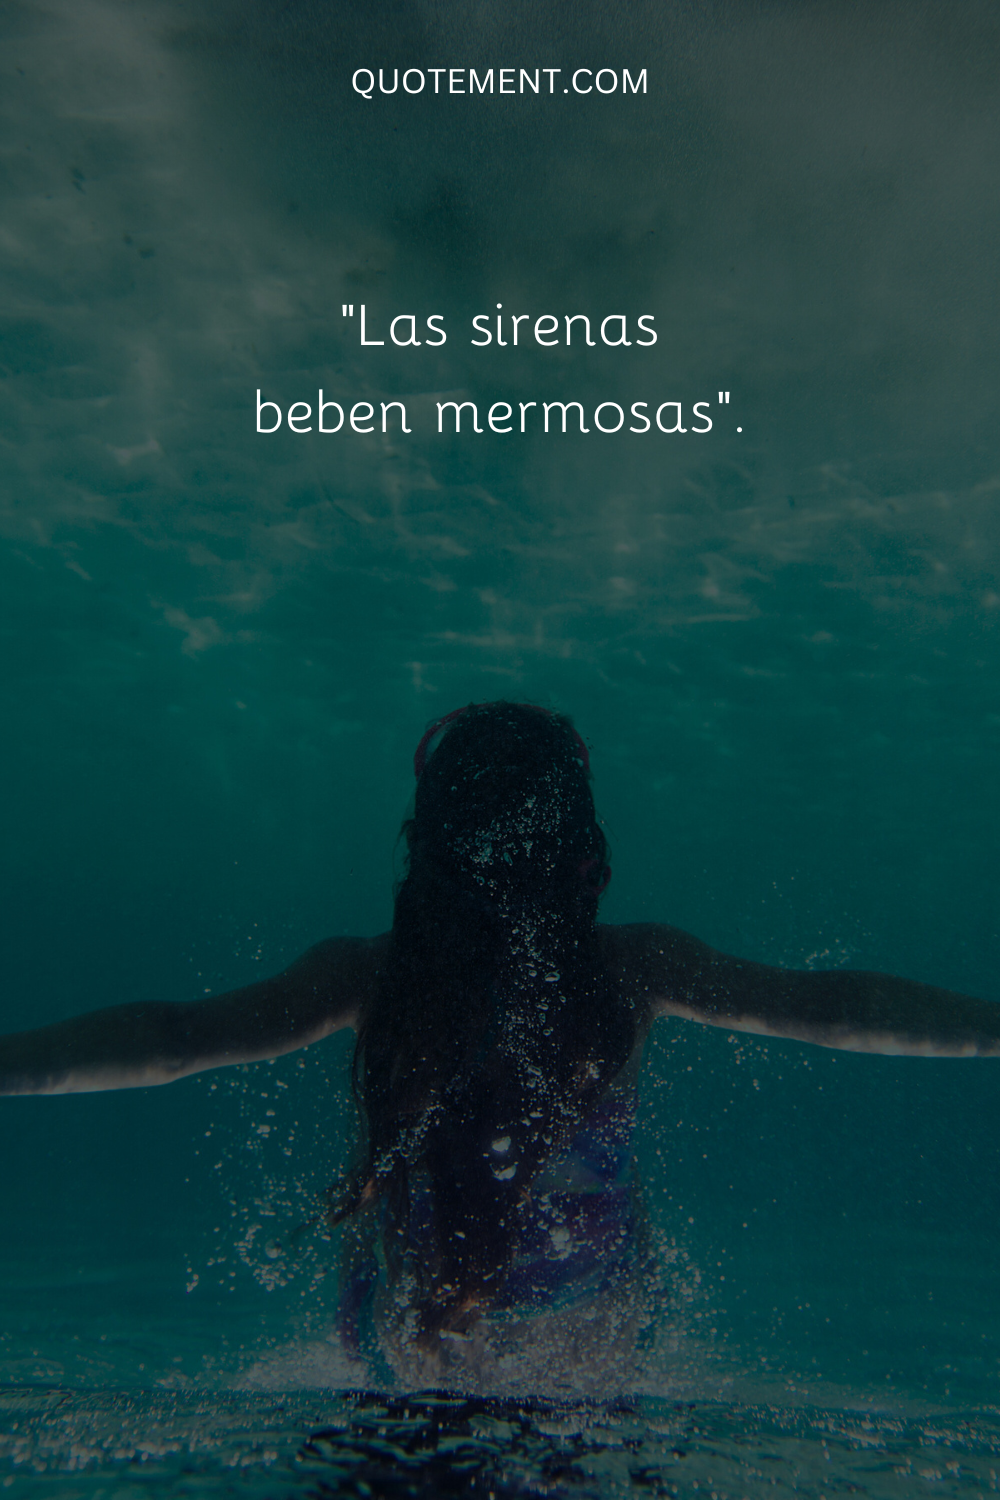 "Las sirenas beben mermosas".